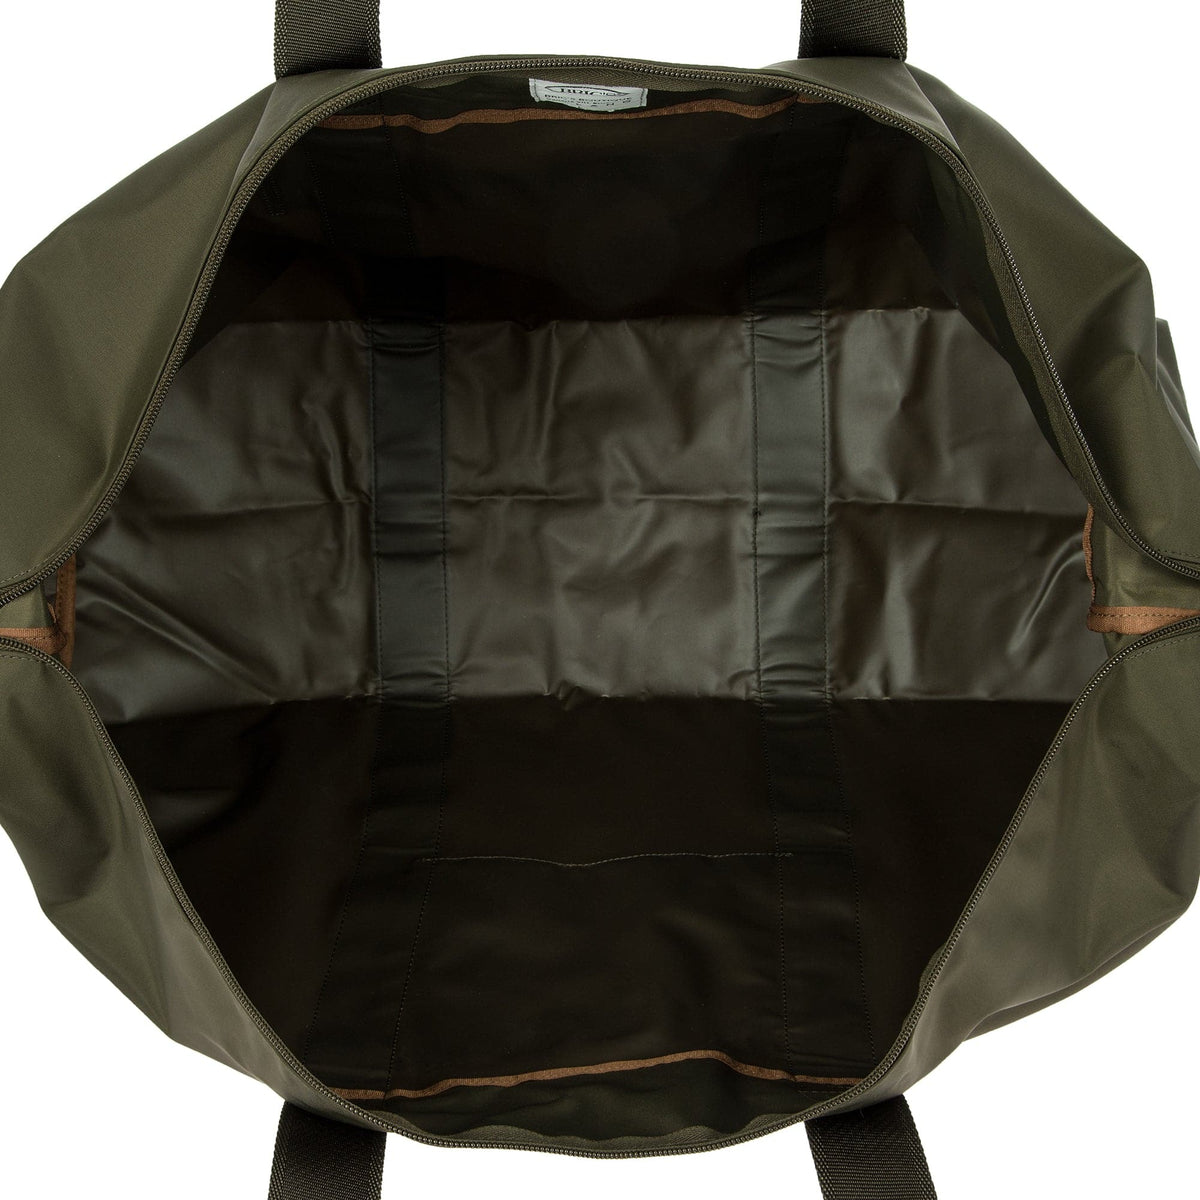 Bric's X-Bag/X-Travel 22" Folding Duffle Bag